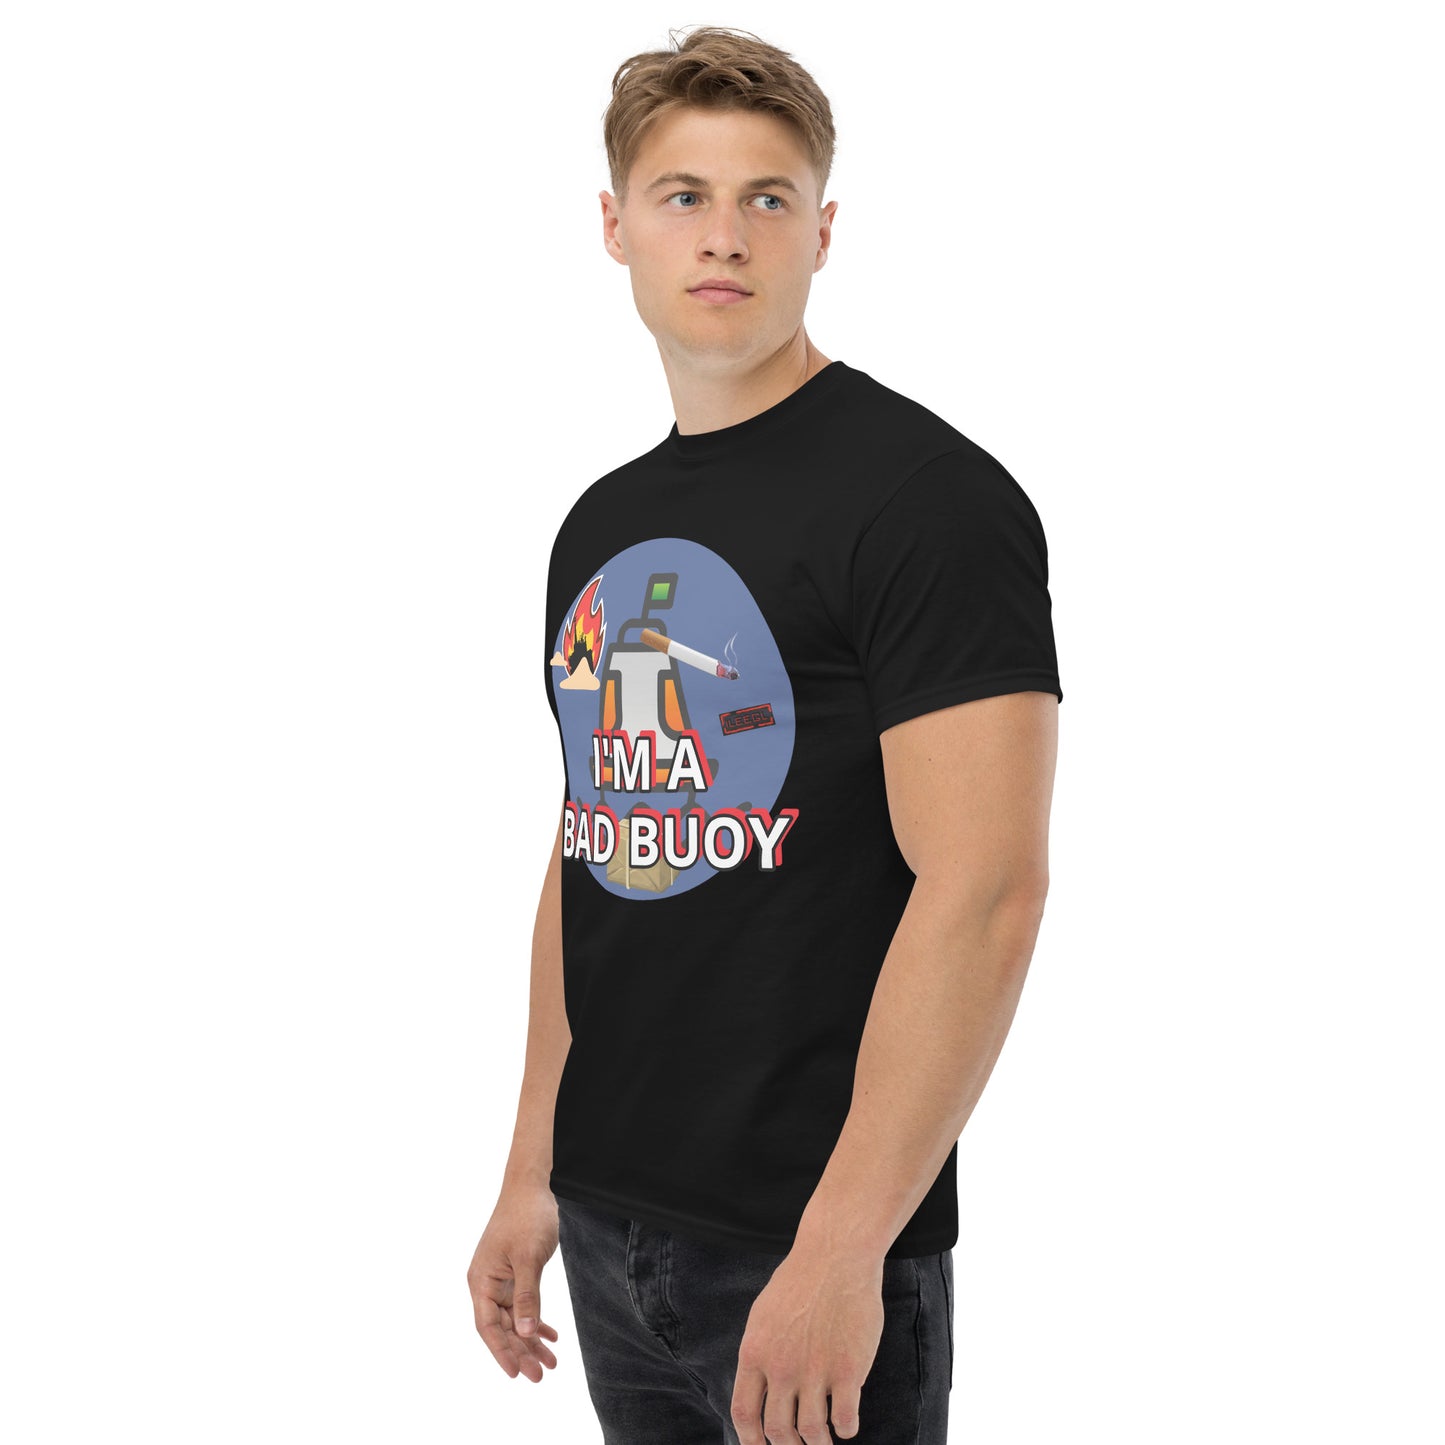 Bad Buoy T-Shirt